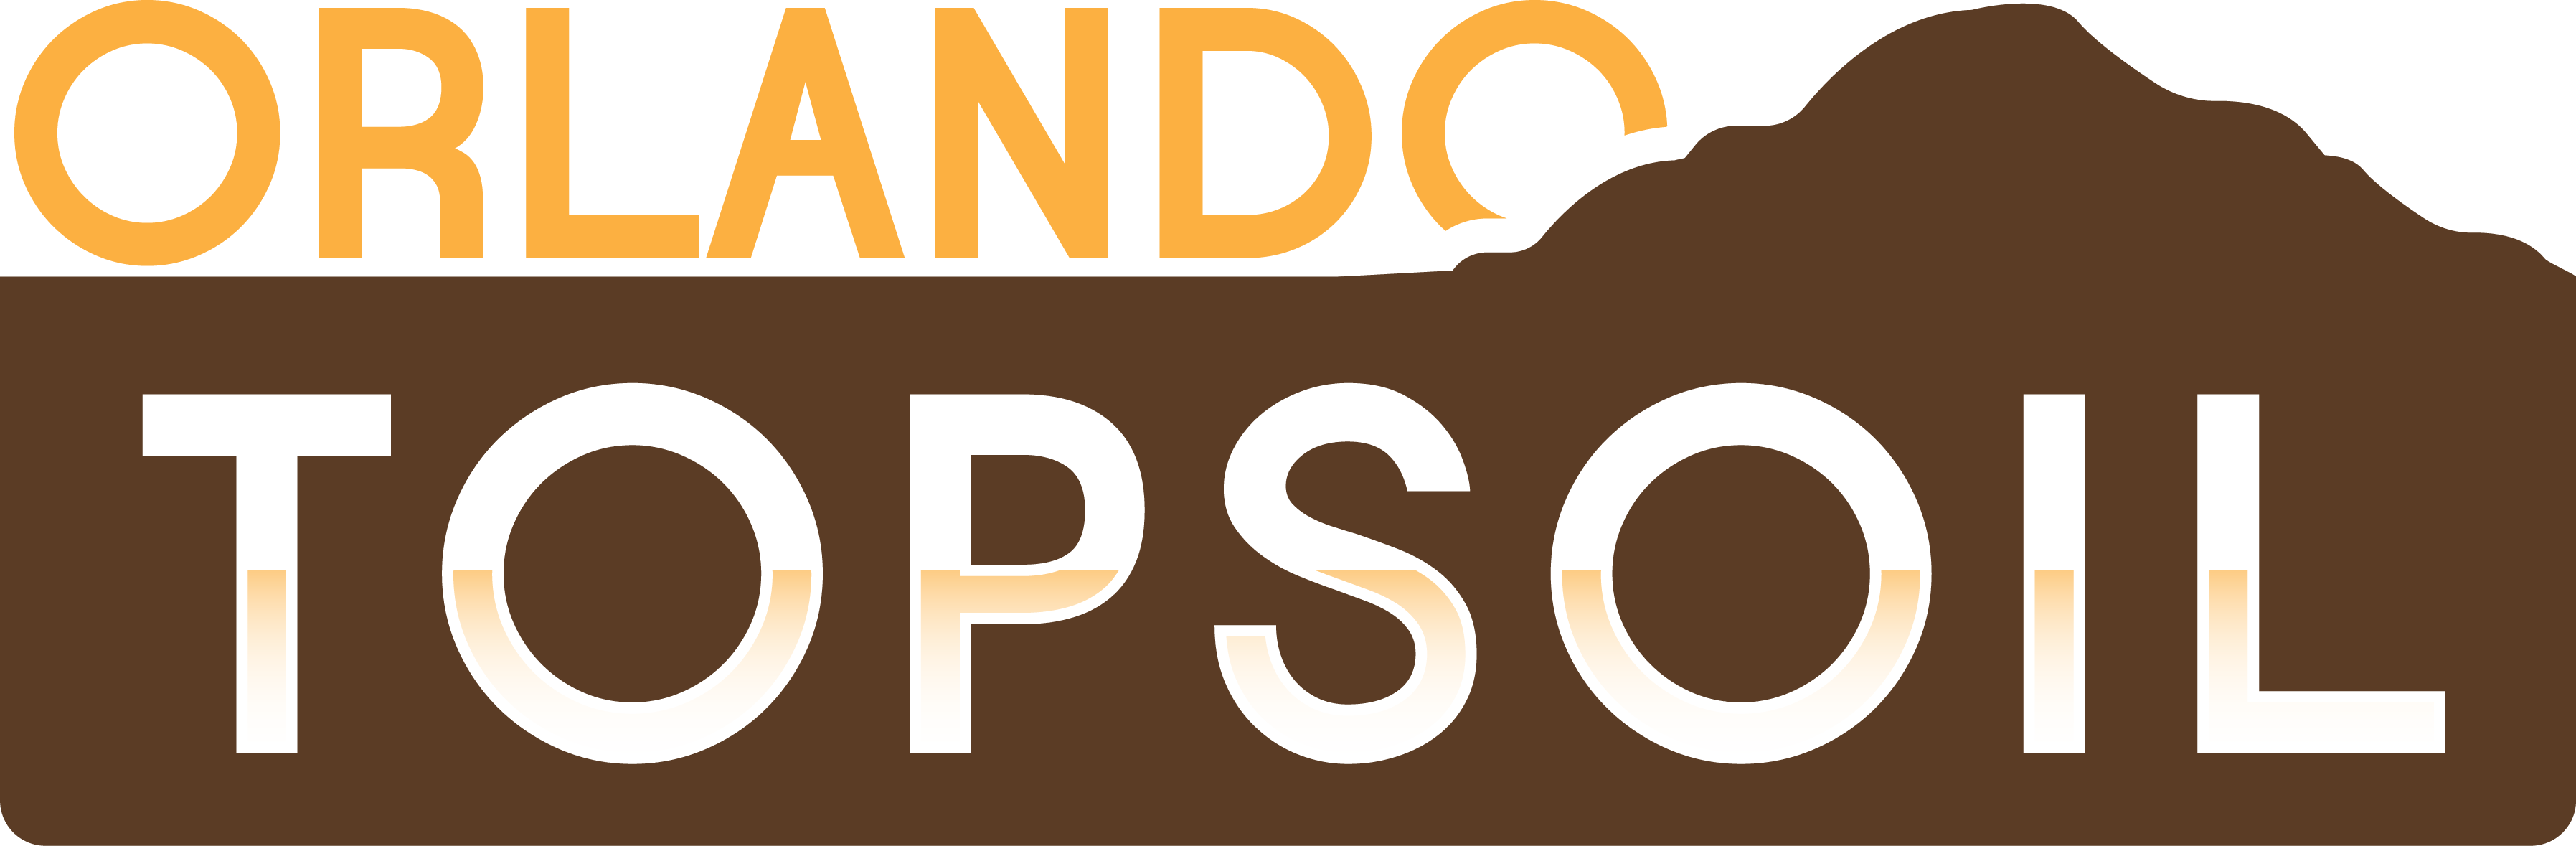 Orlandotopsoil